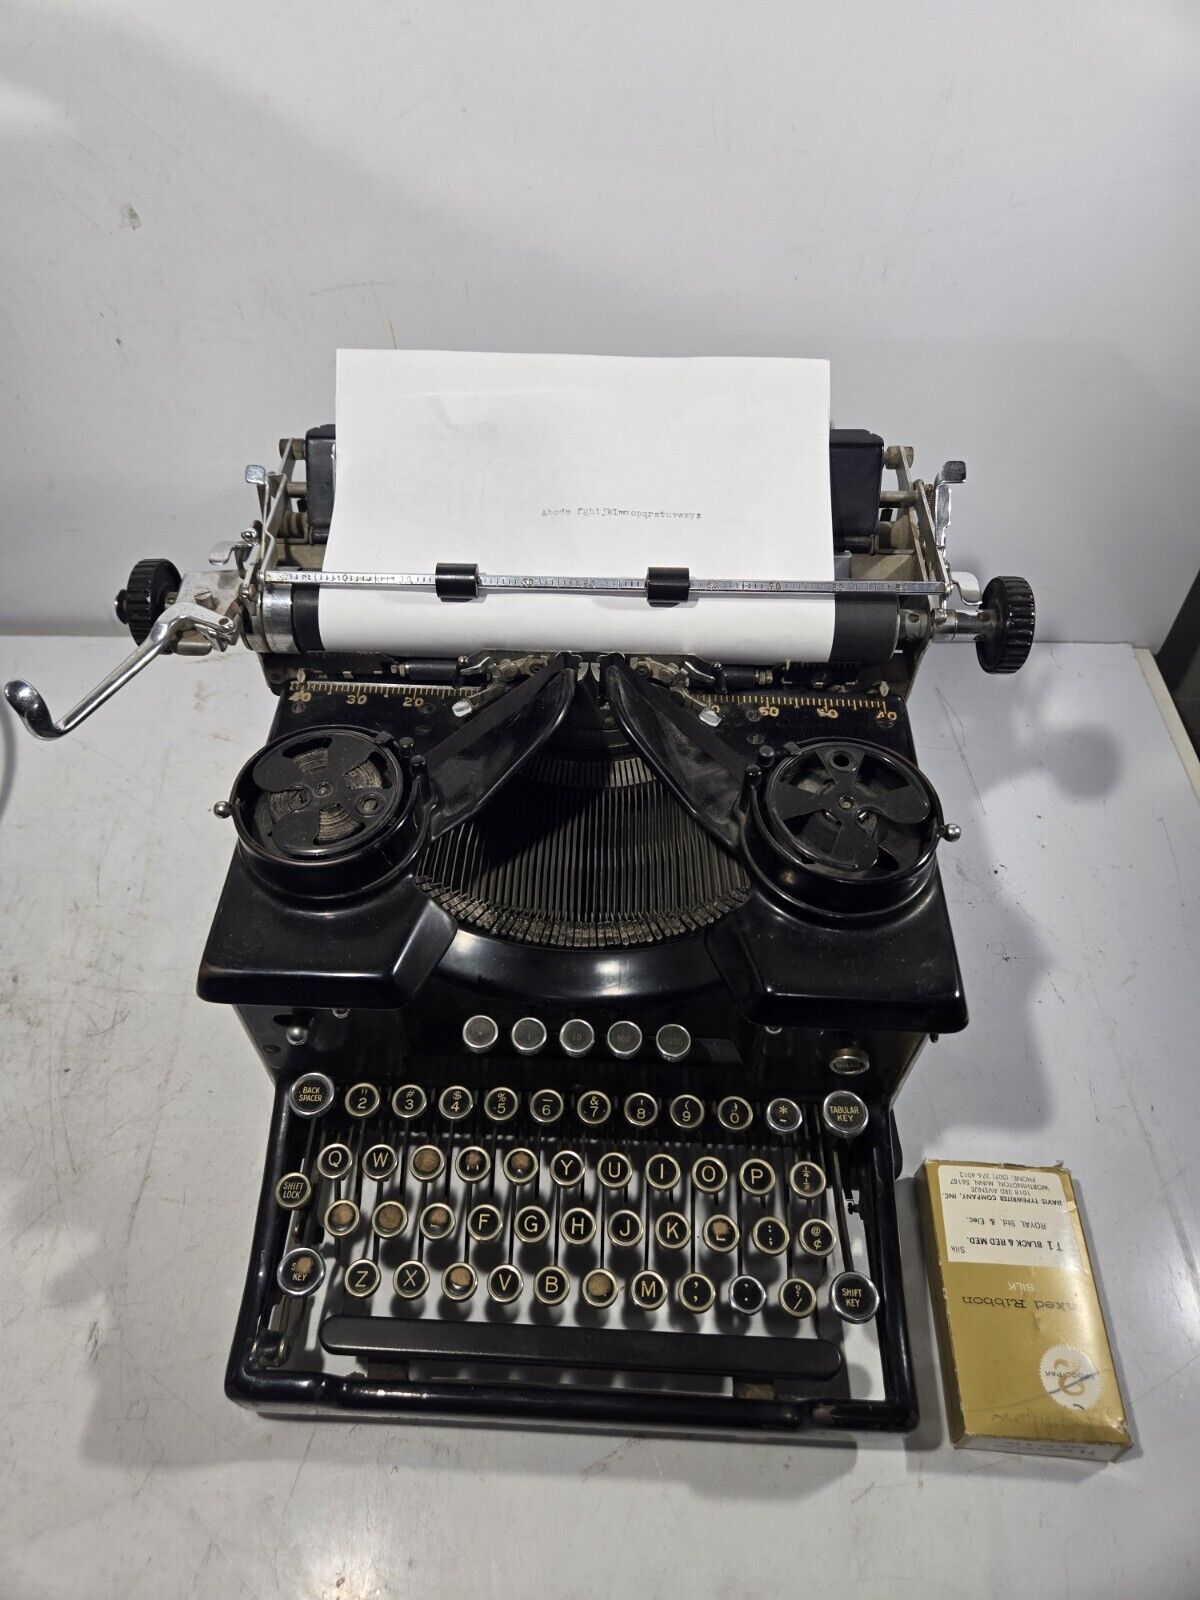 Vintage Royal Typewriter Model 10 1934? EUC S-1634408 Beveled glass sides